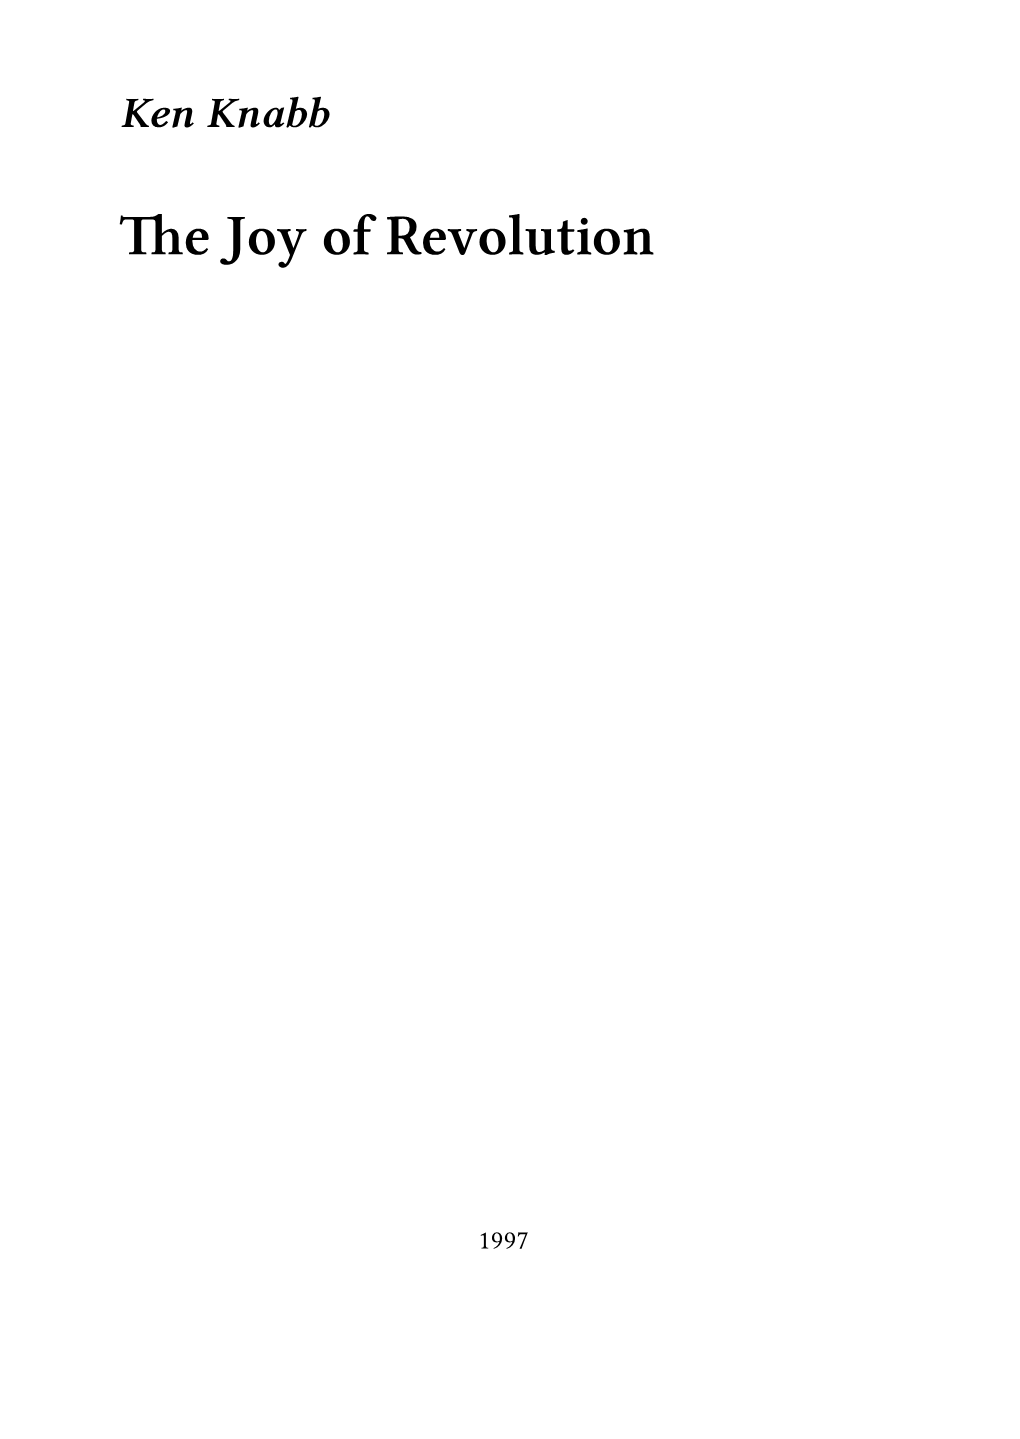 The Joy of Revolution